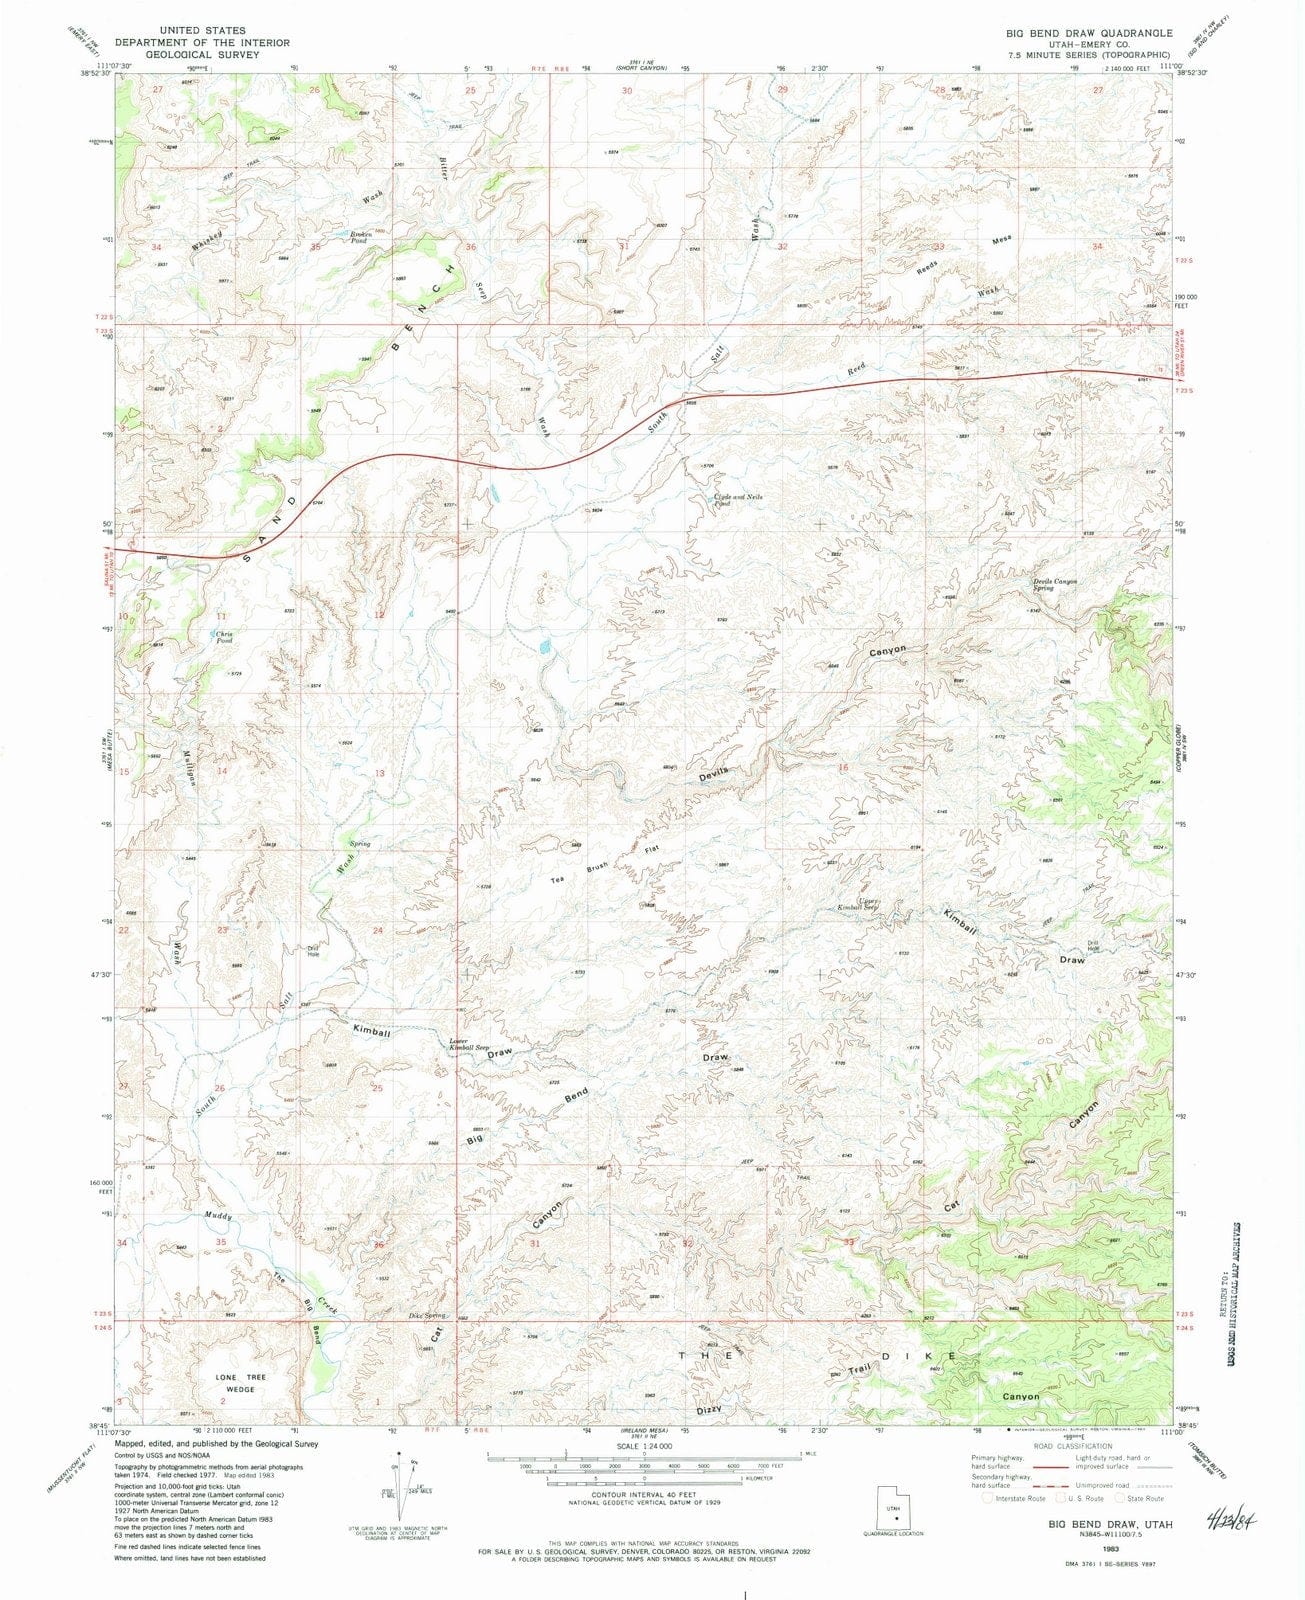 1983 Big Bend Draw, UT - Utah - USGS Topographic Map